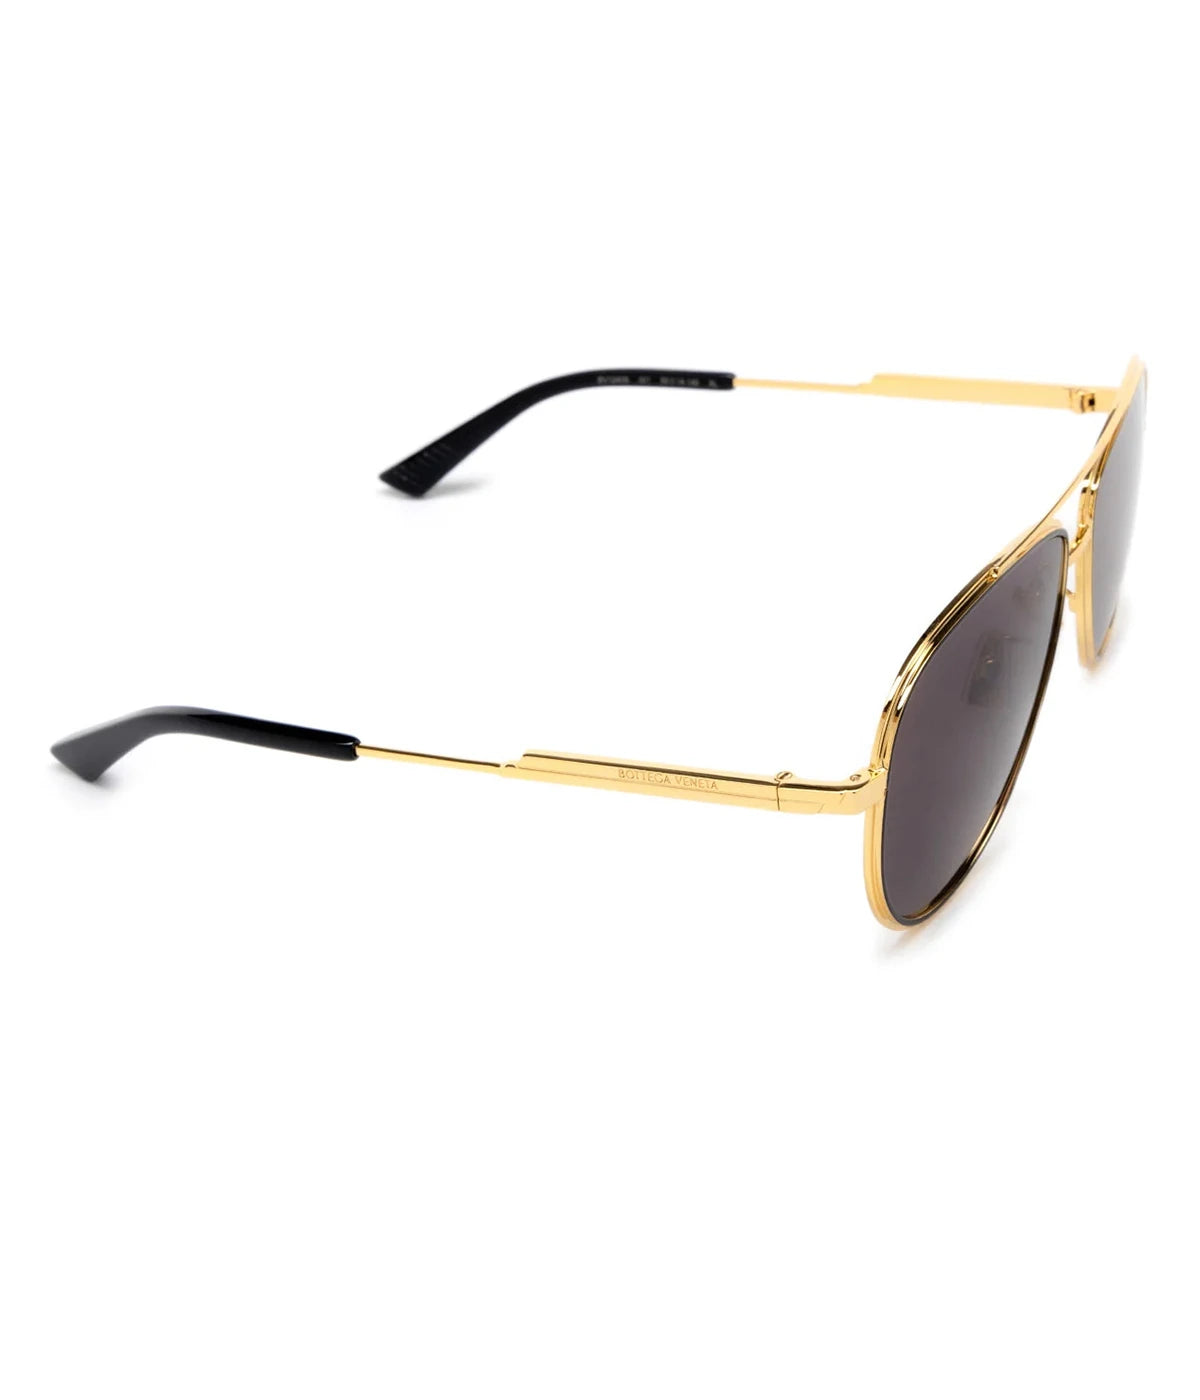 Aviator Sunglasses in Gold